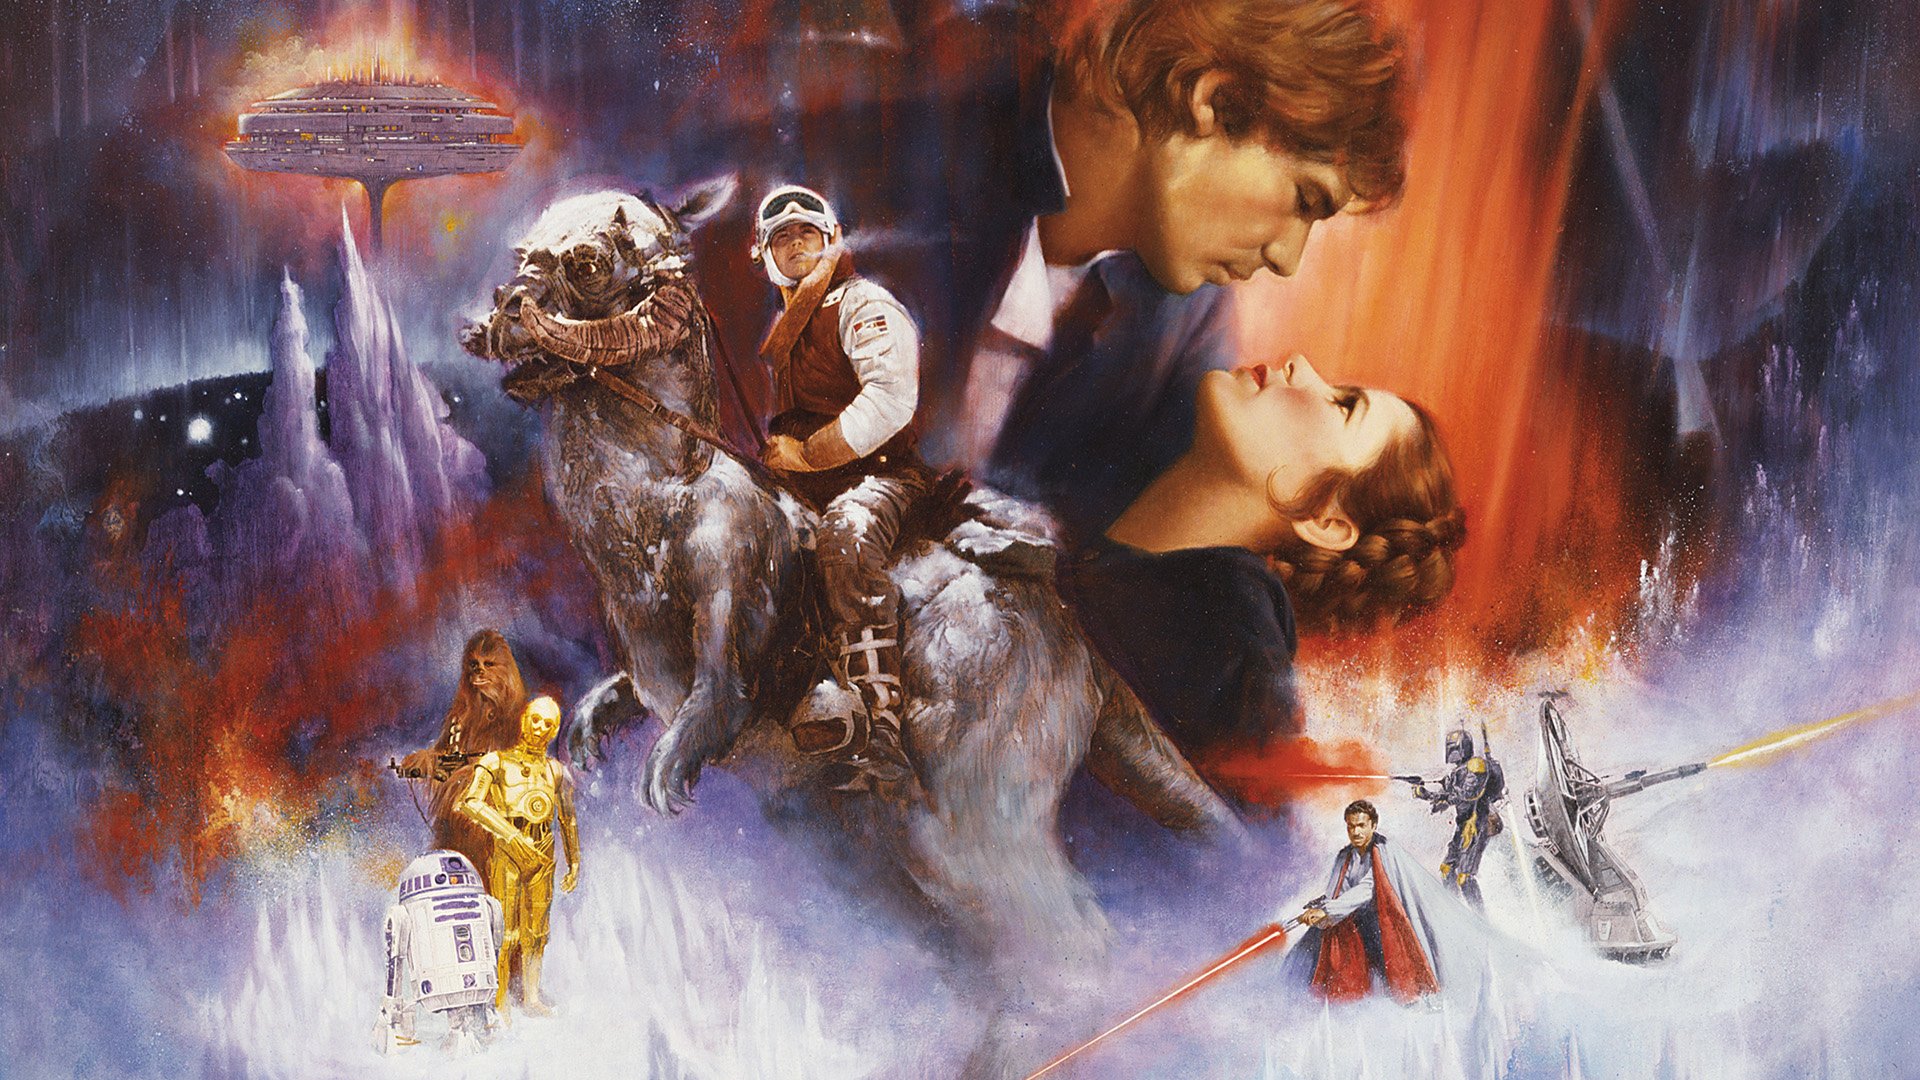 Donald Glover As Lando Calrissian Star Wars Art Wallpapers